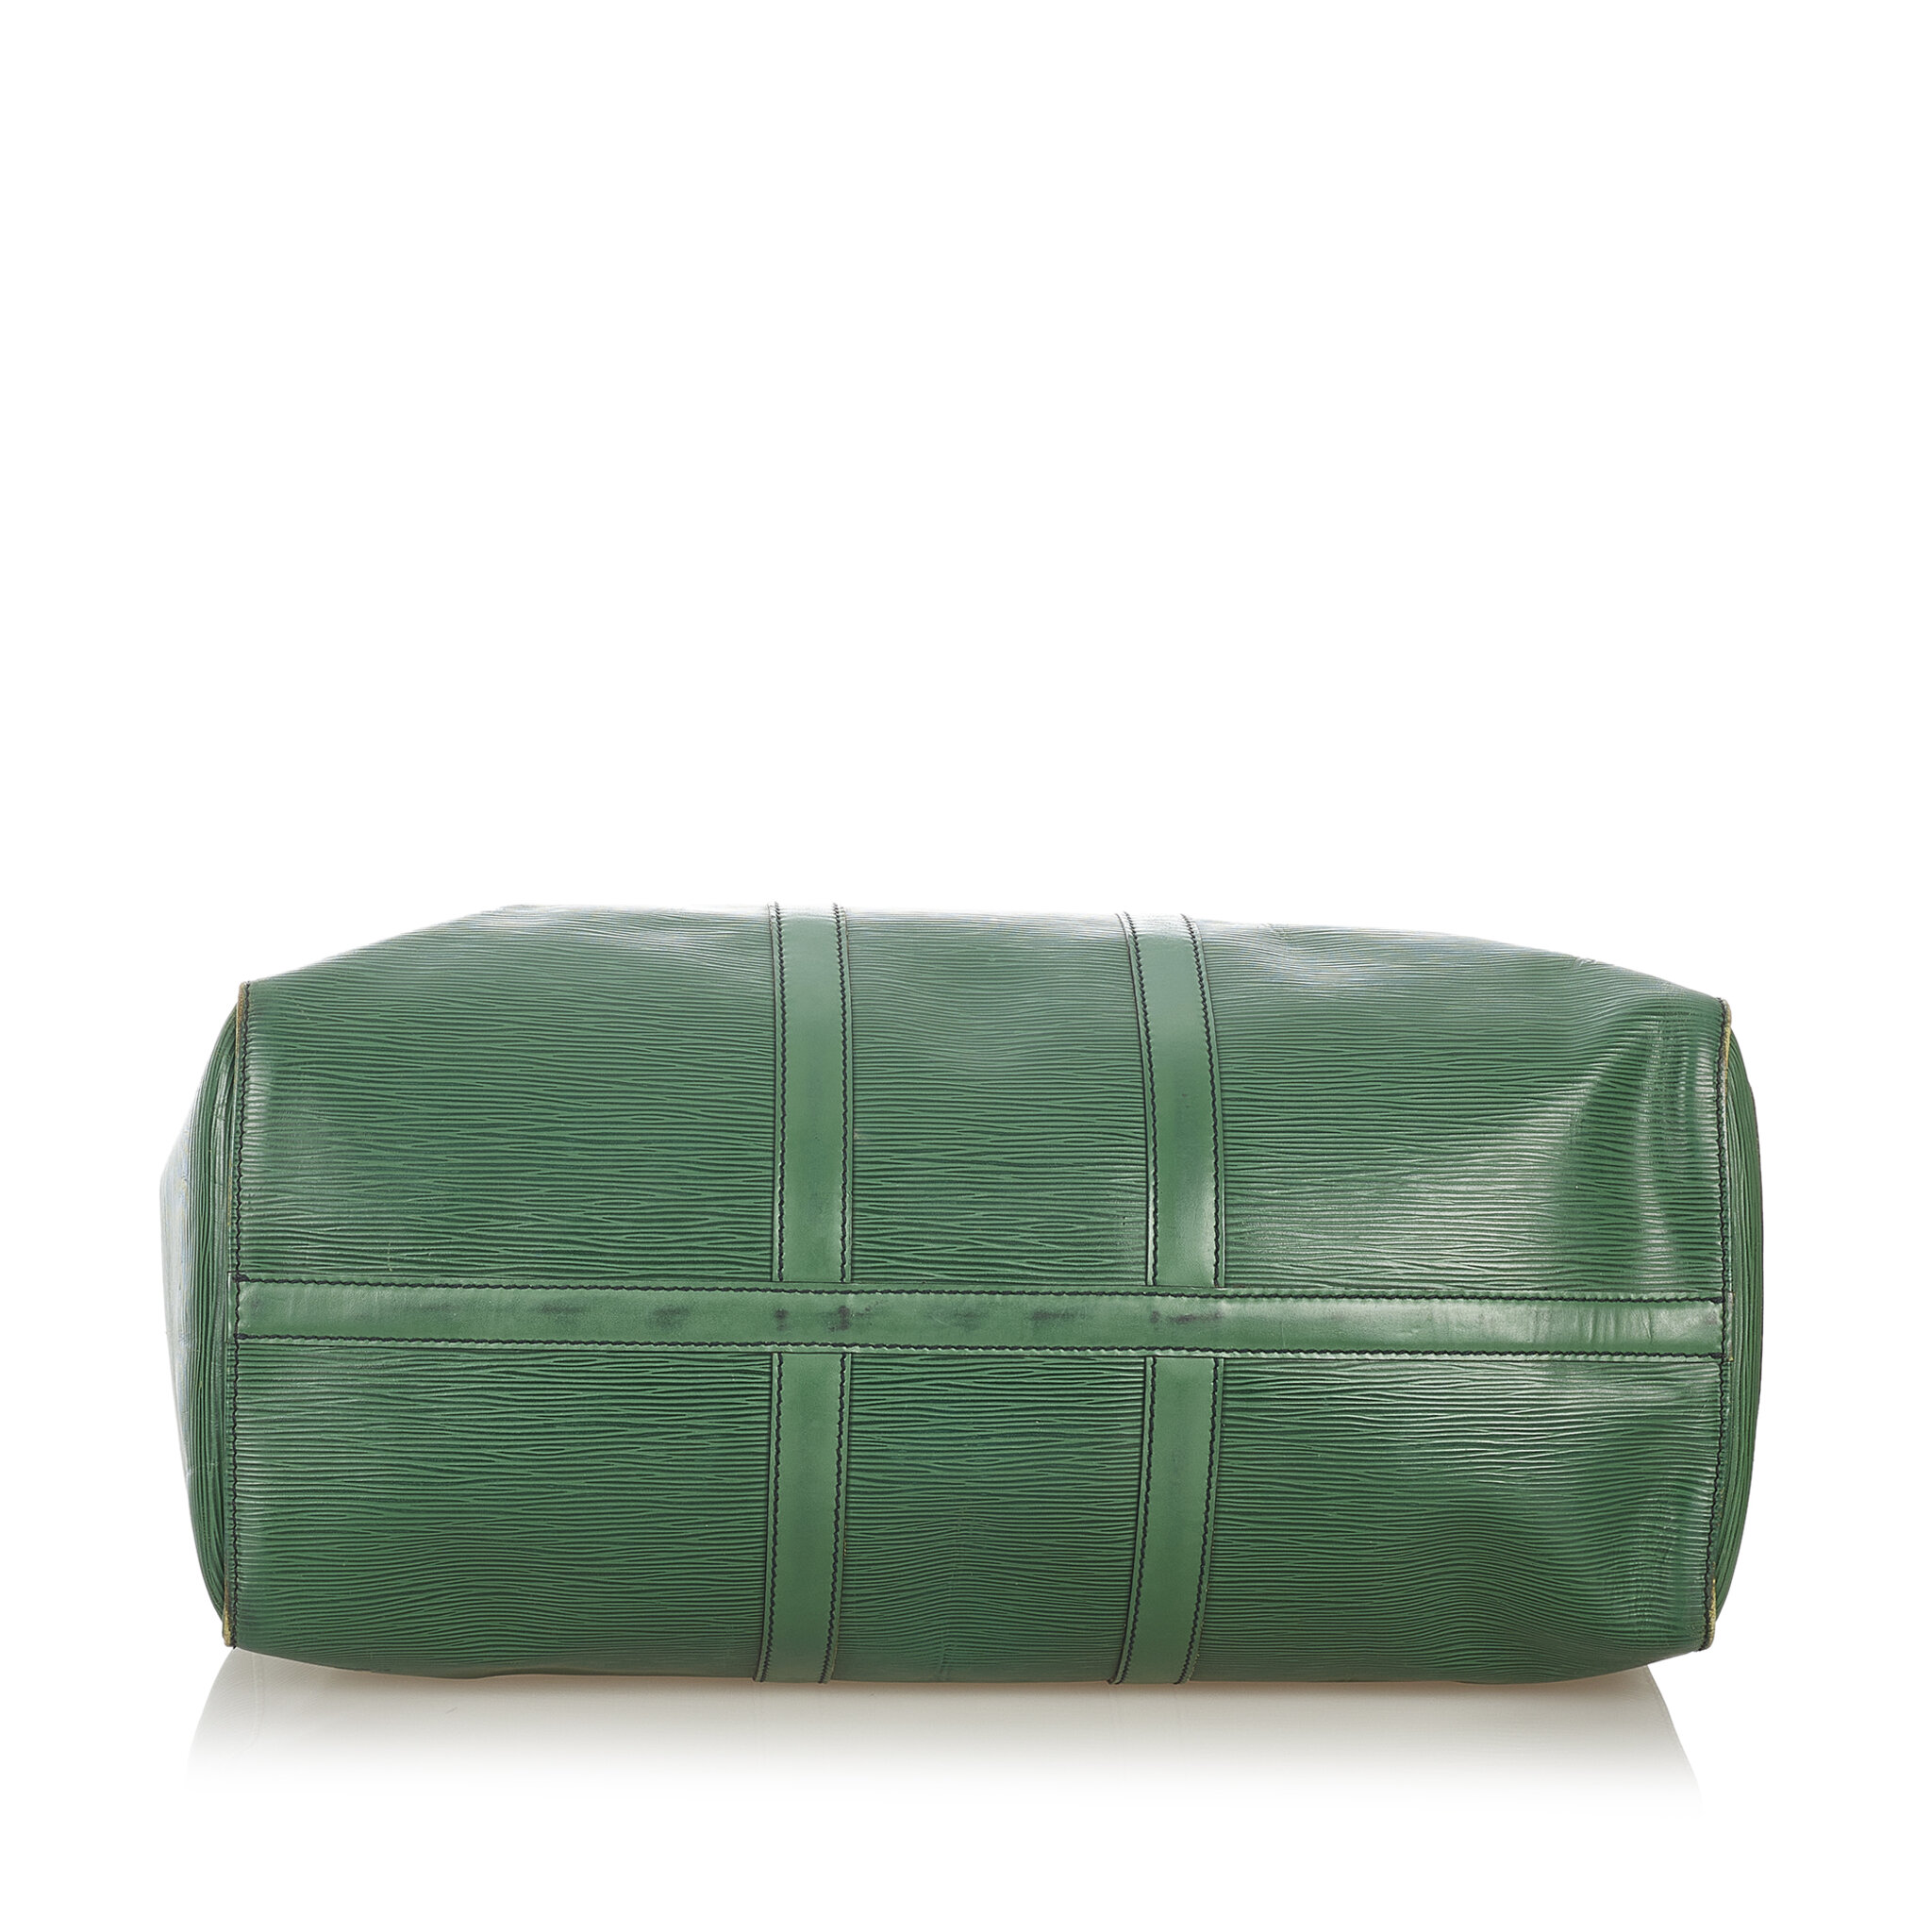 Louis Vuitton Epi Keepall 50, ONESIZE, green